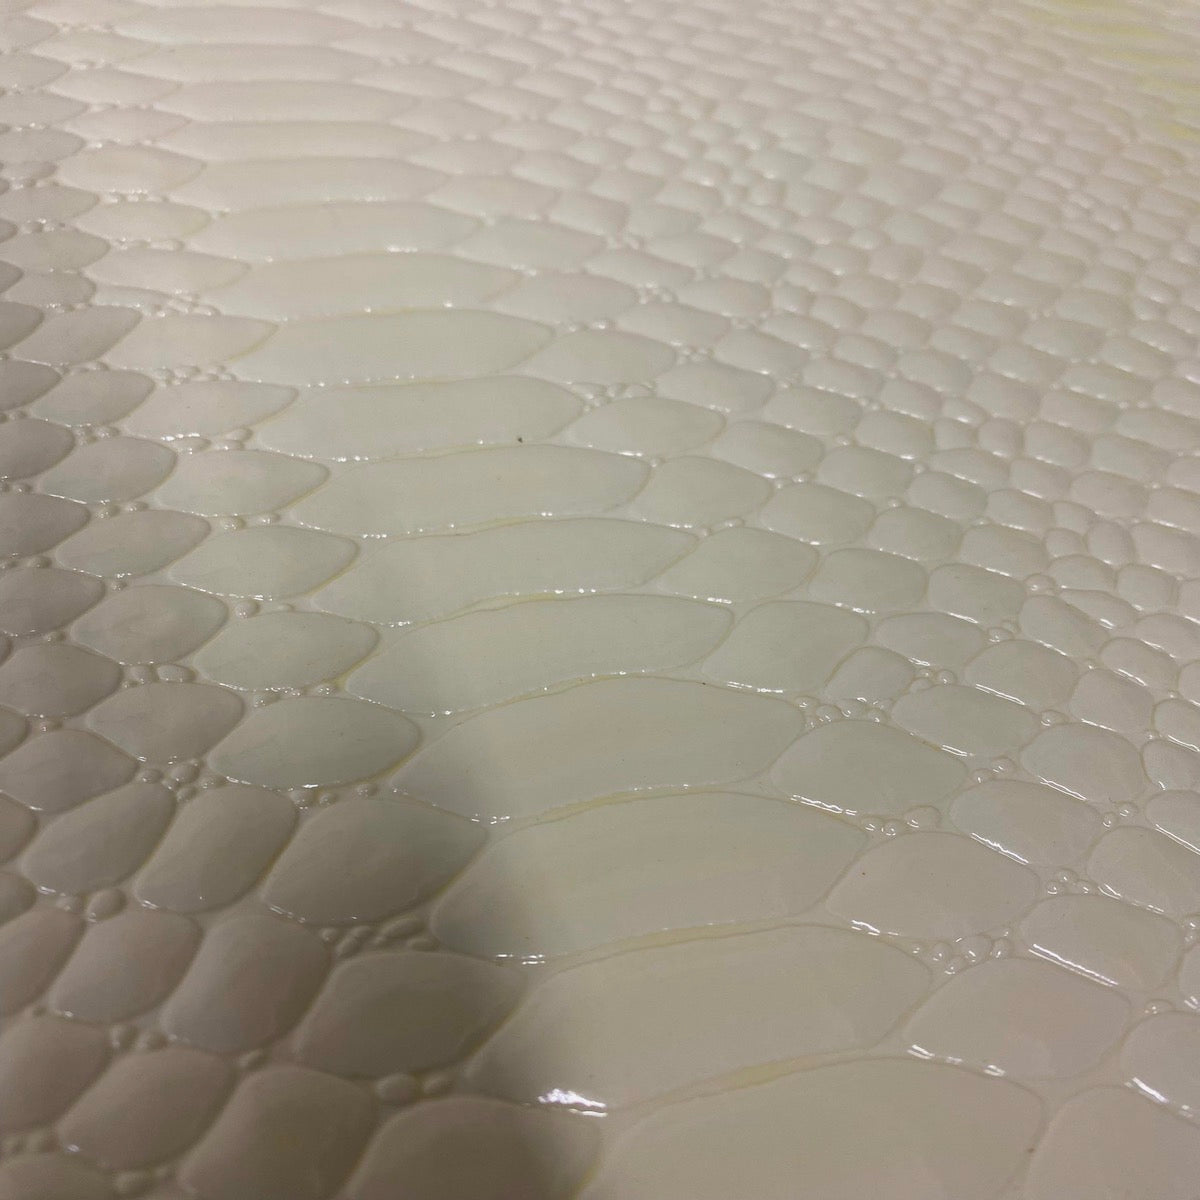 Ivory Culebra Patent 3D Embossed Snakeskin Vinyl Fabric - Fashion Fabrics LLC